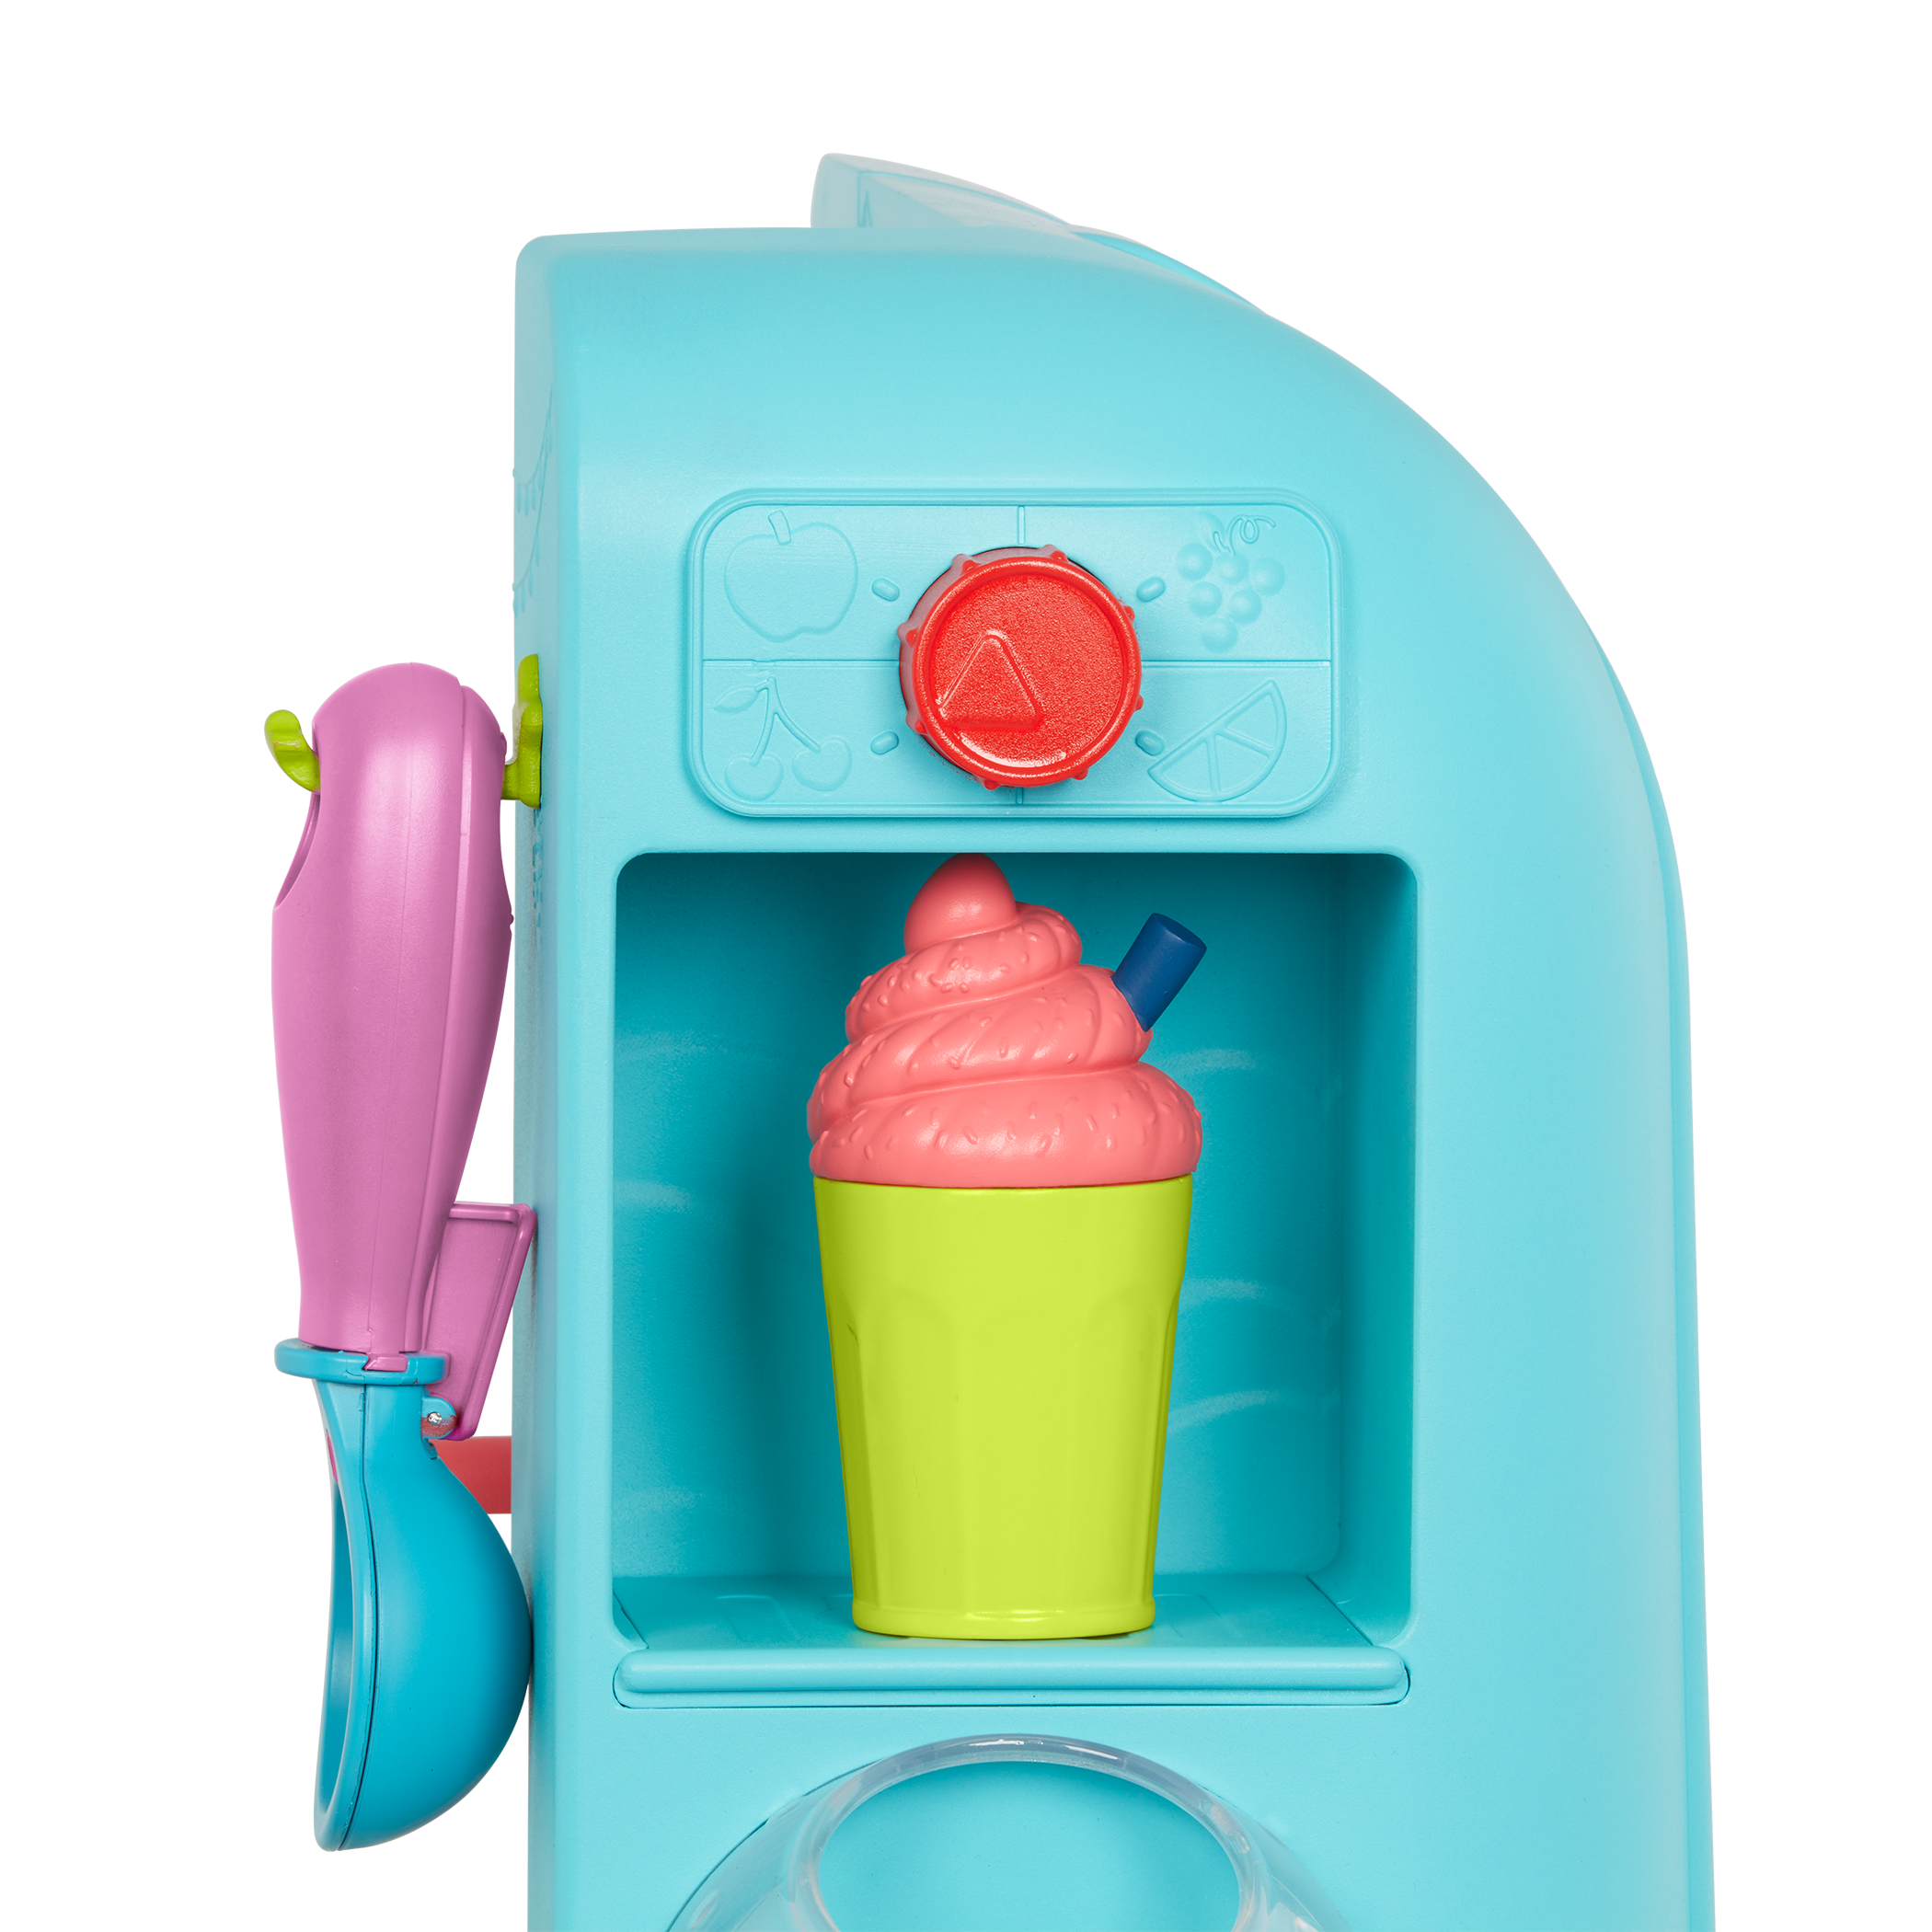 Ice Cream Shoppe, Interactive Ice Cream Truck